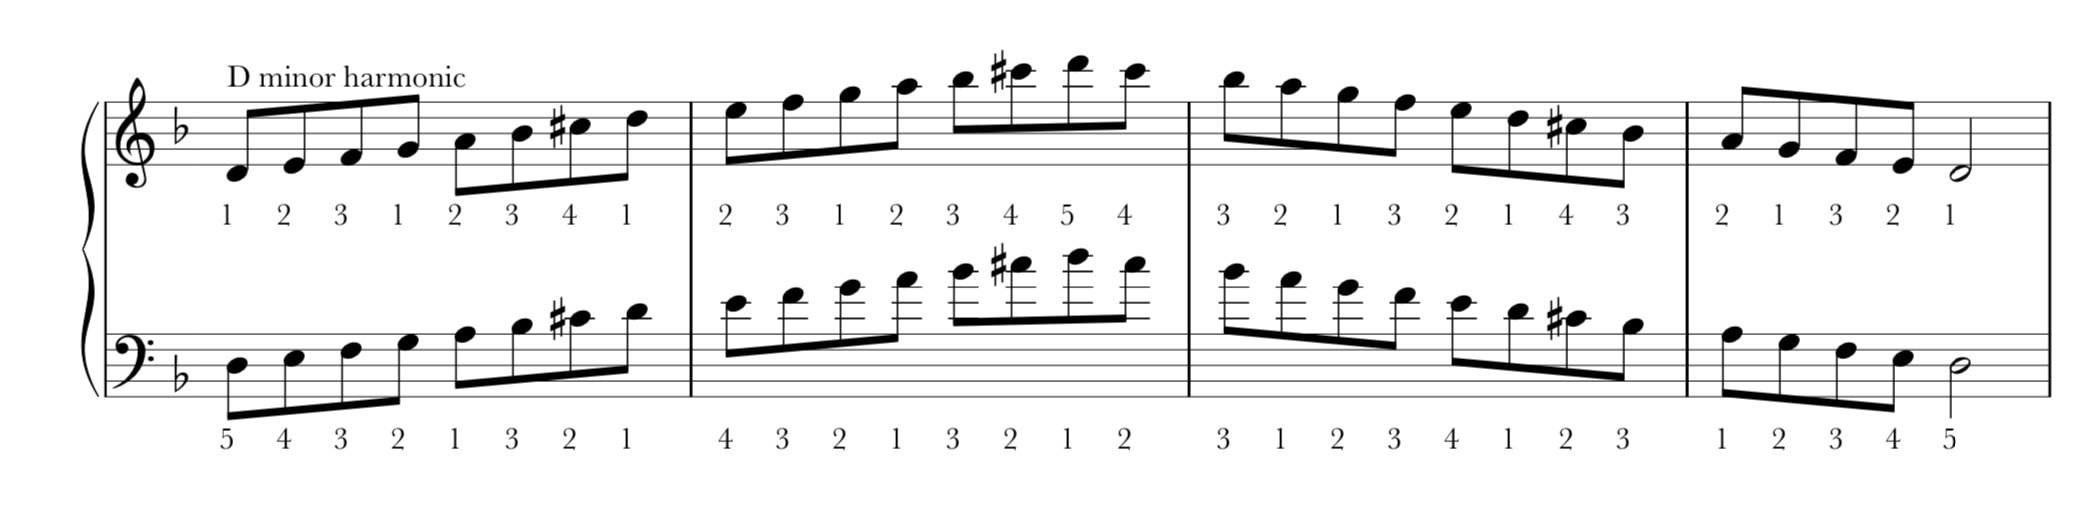 b flat harmonic minor scale piano